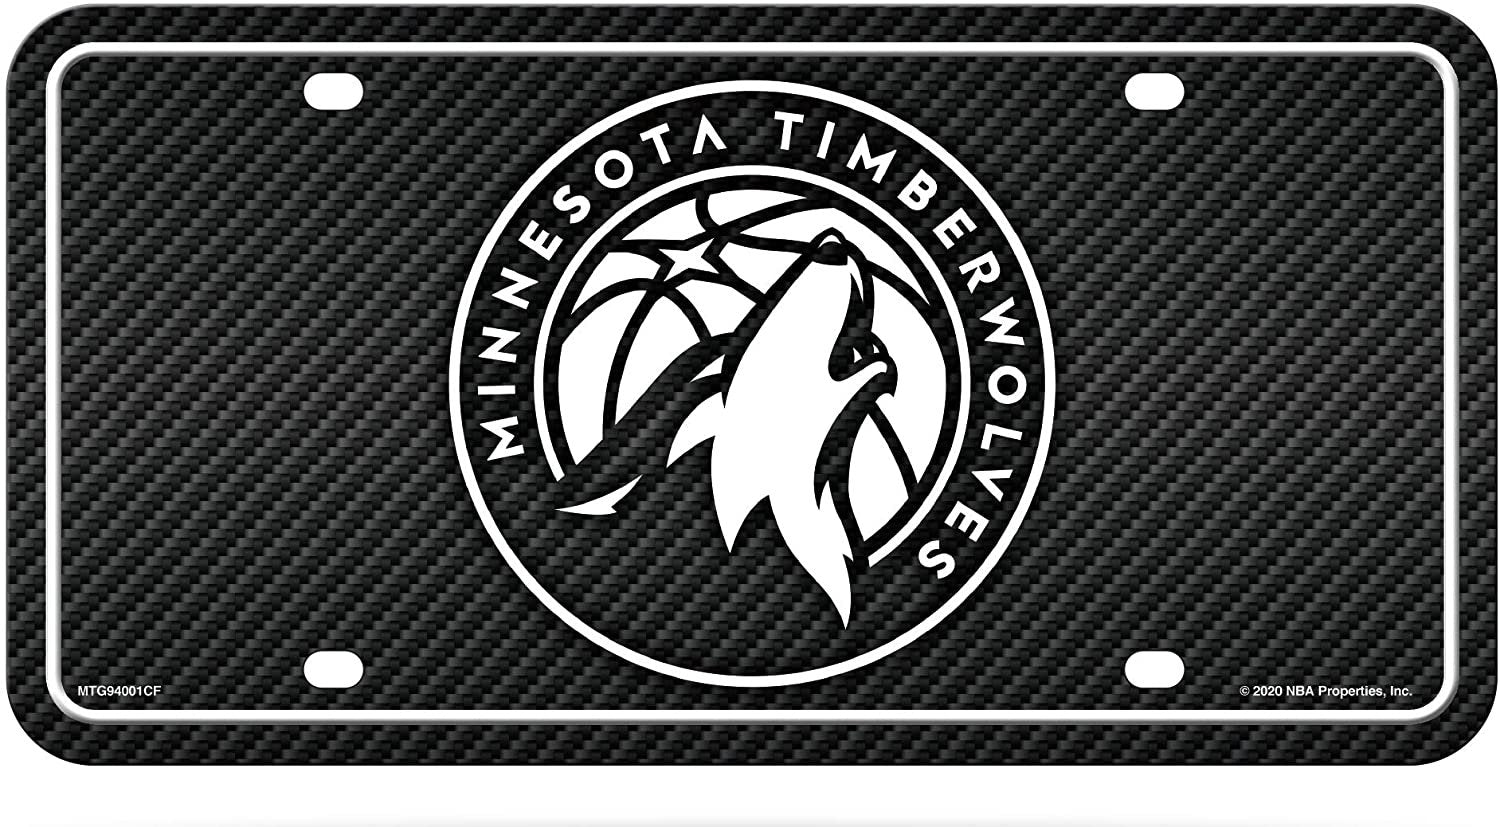 Minnesota Timberwolves Metal Auto Tag License Plate, Carbon Fiber Design, 6x12 Inch